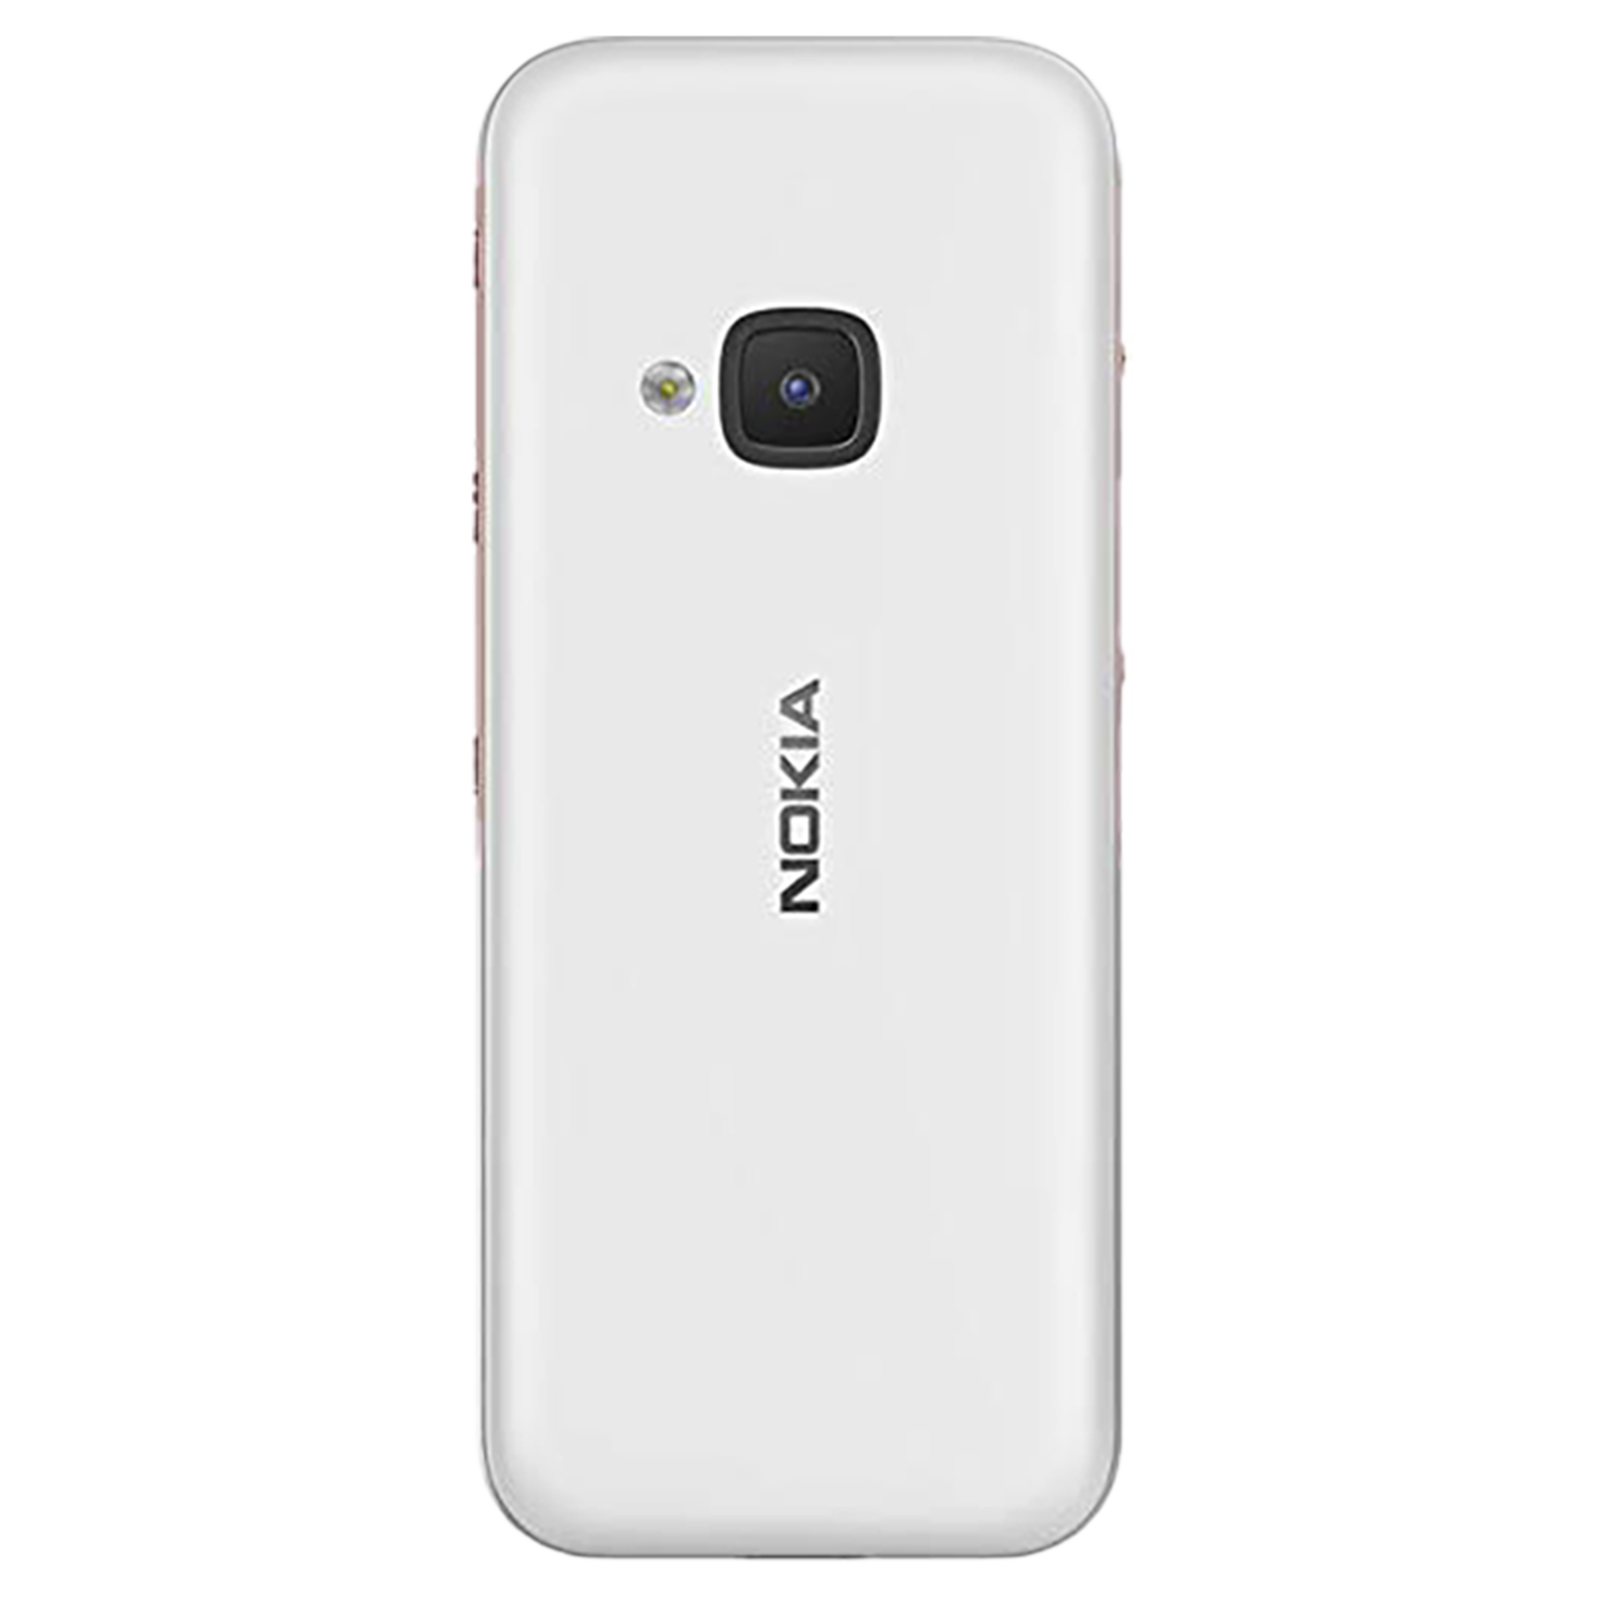 buy-nokia-5310-16mb-dual-sim-rear-camera-white-online-croma